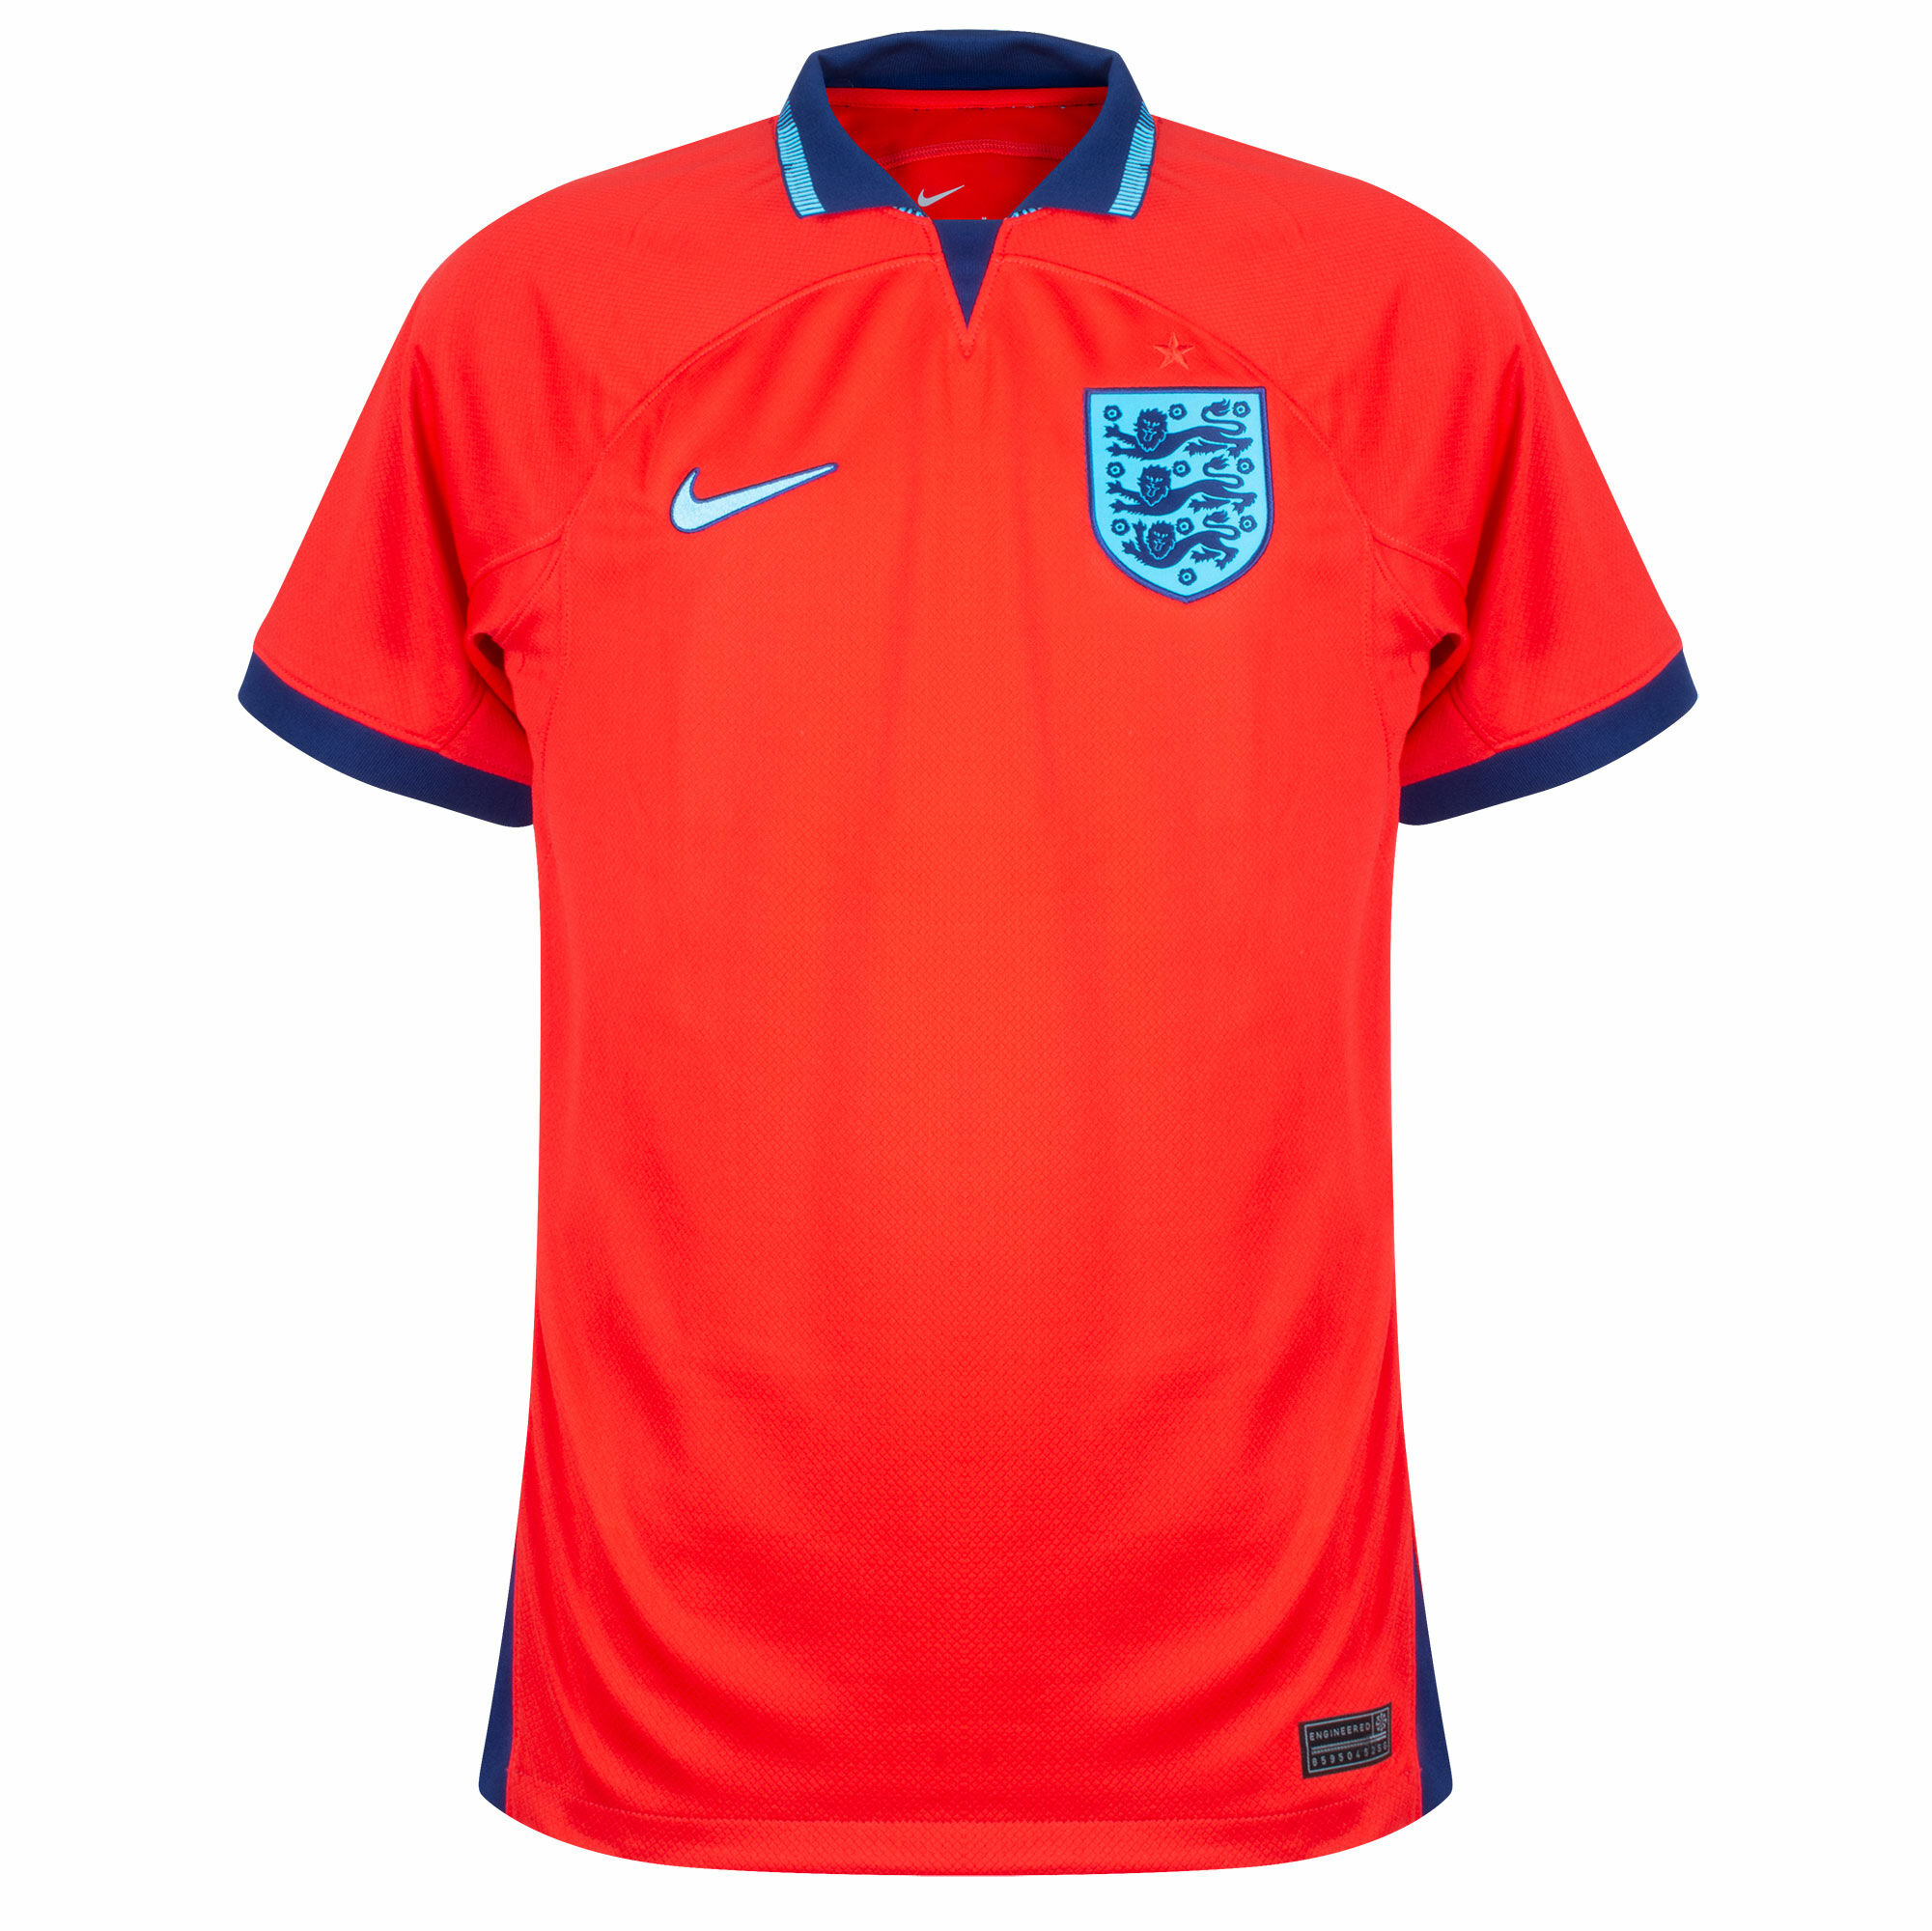 Anglie - Dres fotbalový - modročervený, sezóna 2022/23, venkovní